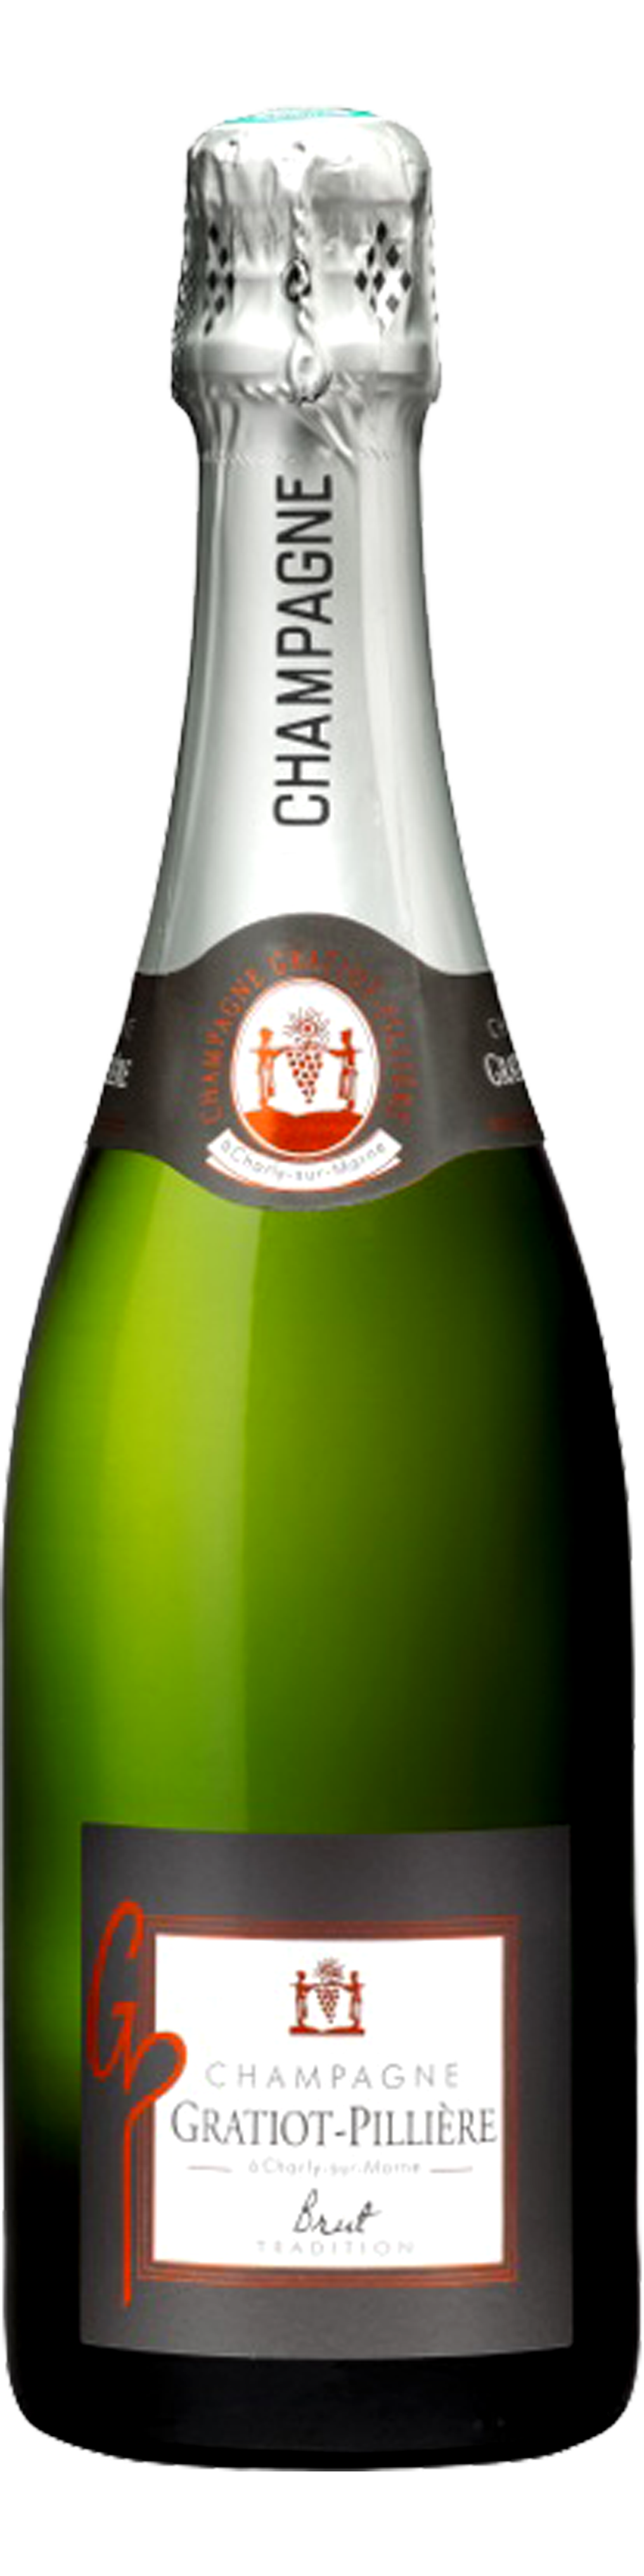 Bottle shot of Gratiot-Pillière Brut Tradition